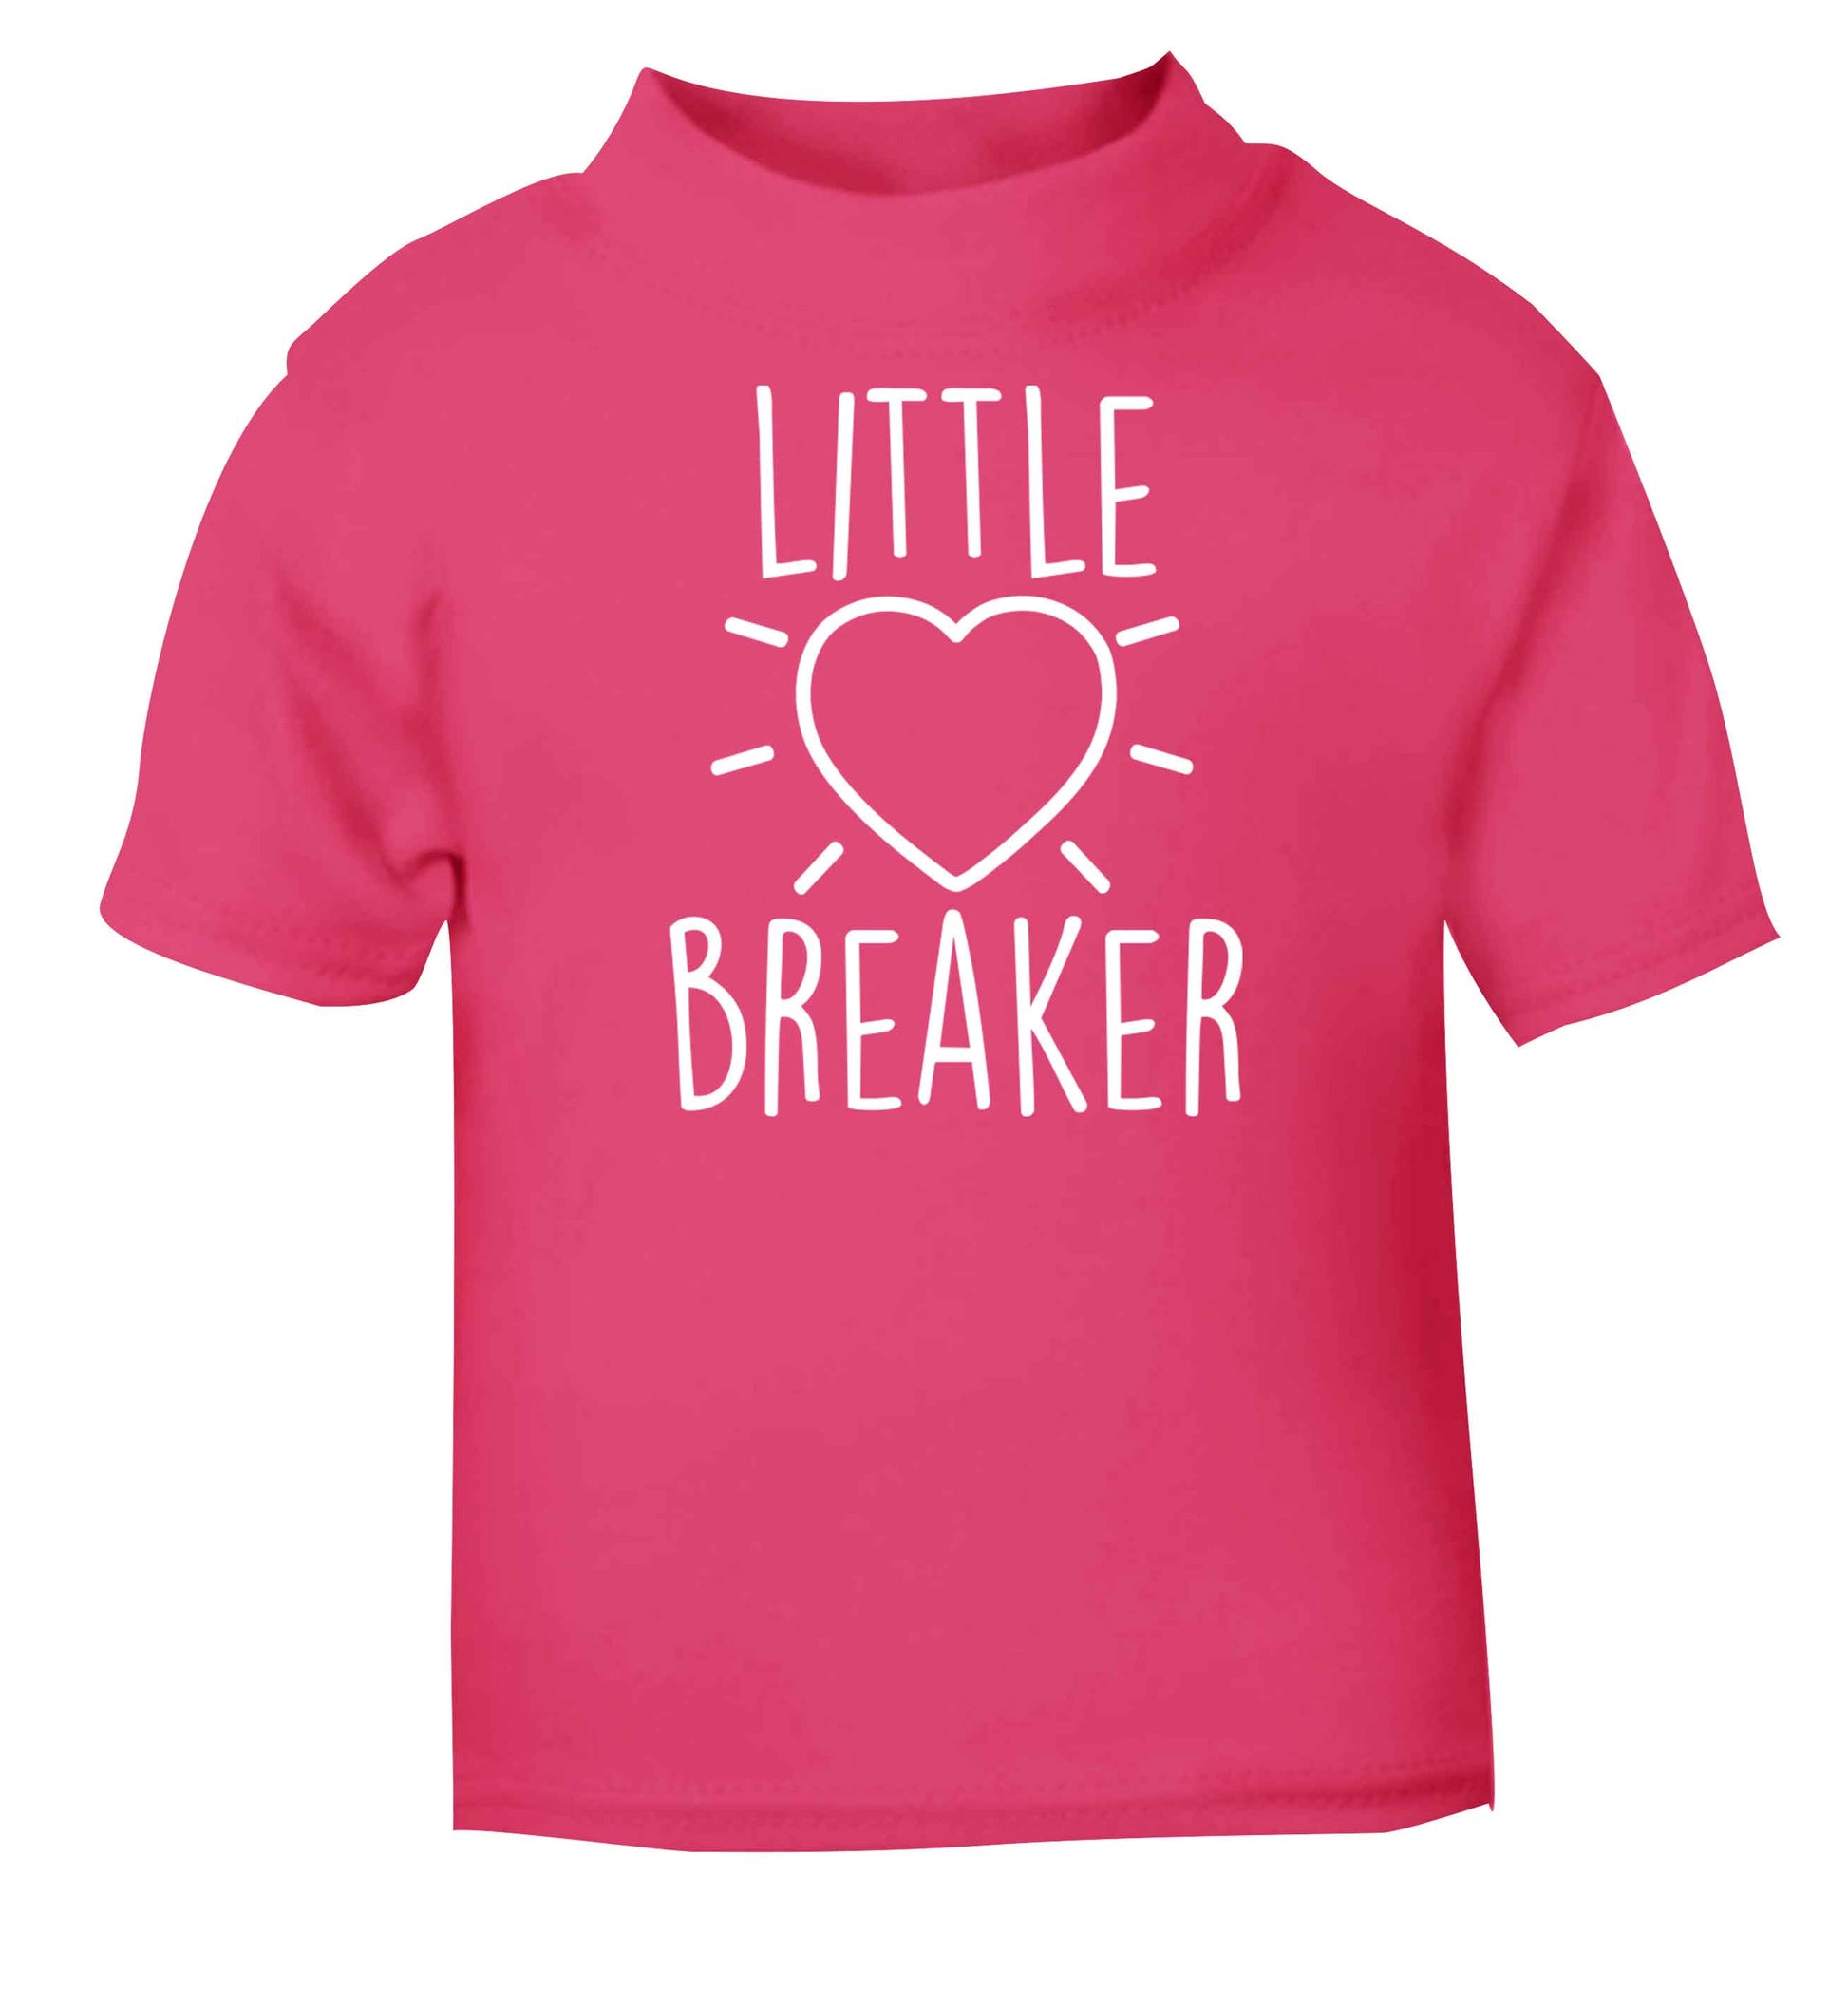 Little heartbreaker pink baby toddler Tshirt 2 Years